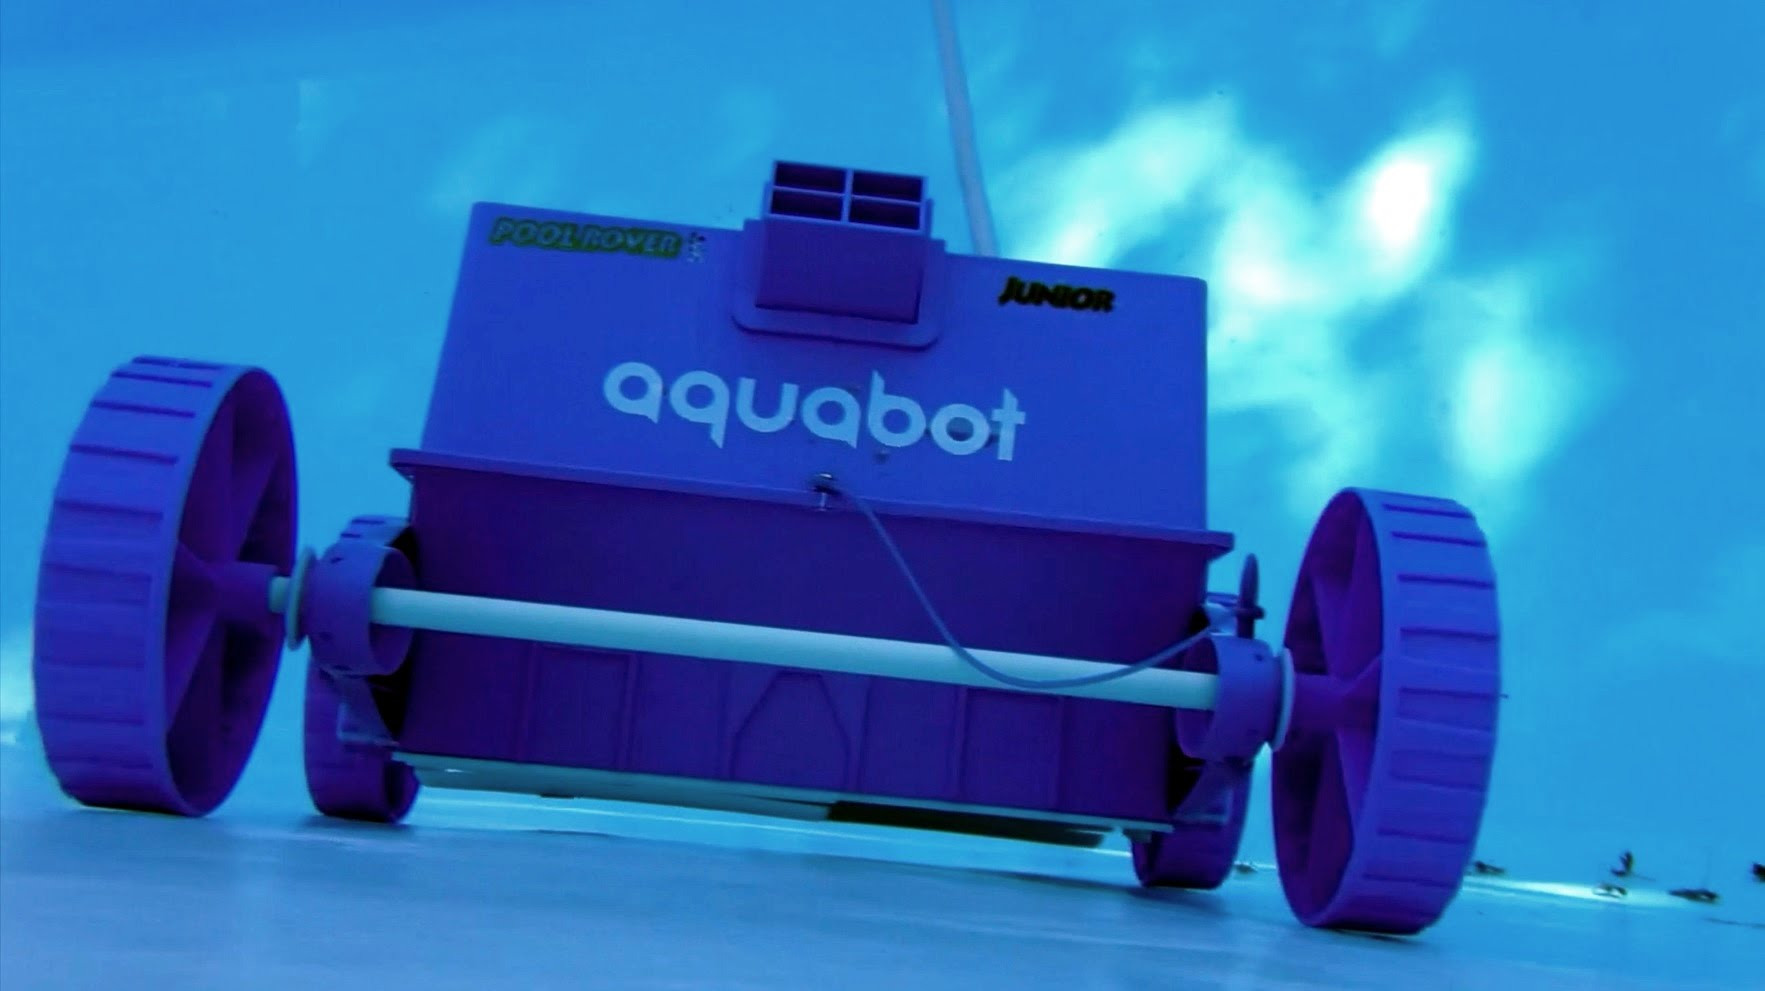 Above Ground Robotic Pool Cleaner
 Best Robotic Pool Cleaner for Ground Pools